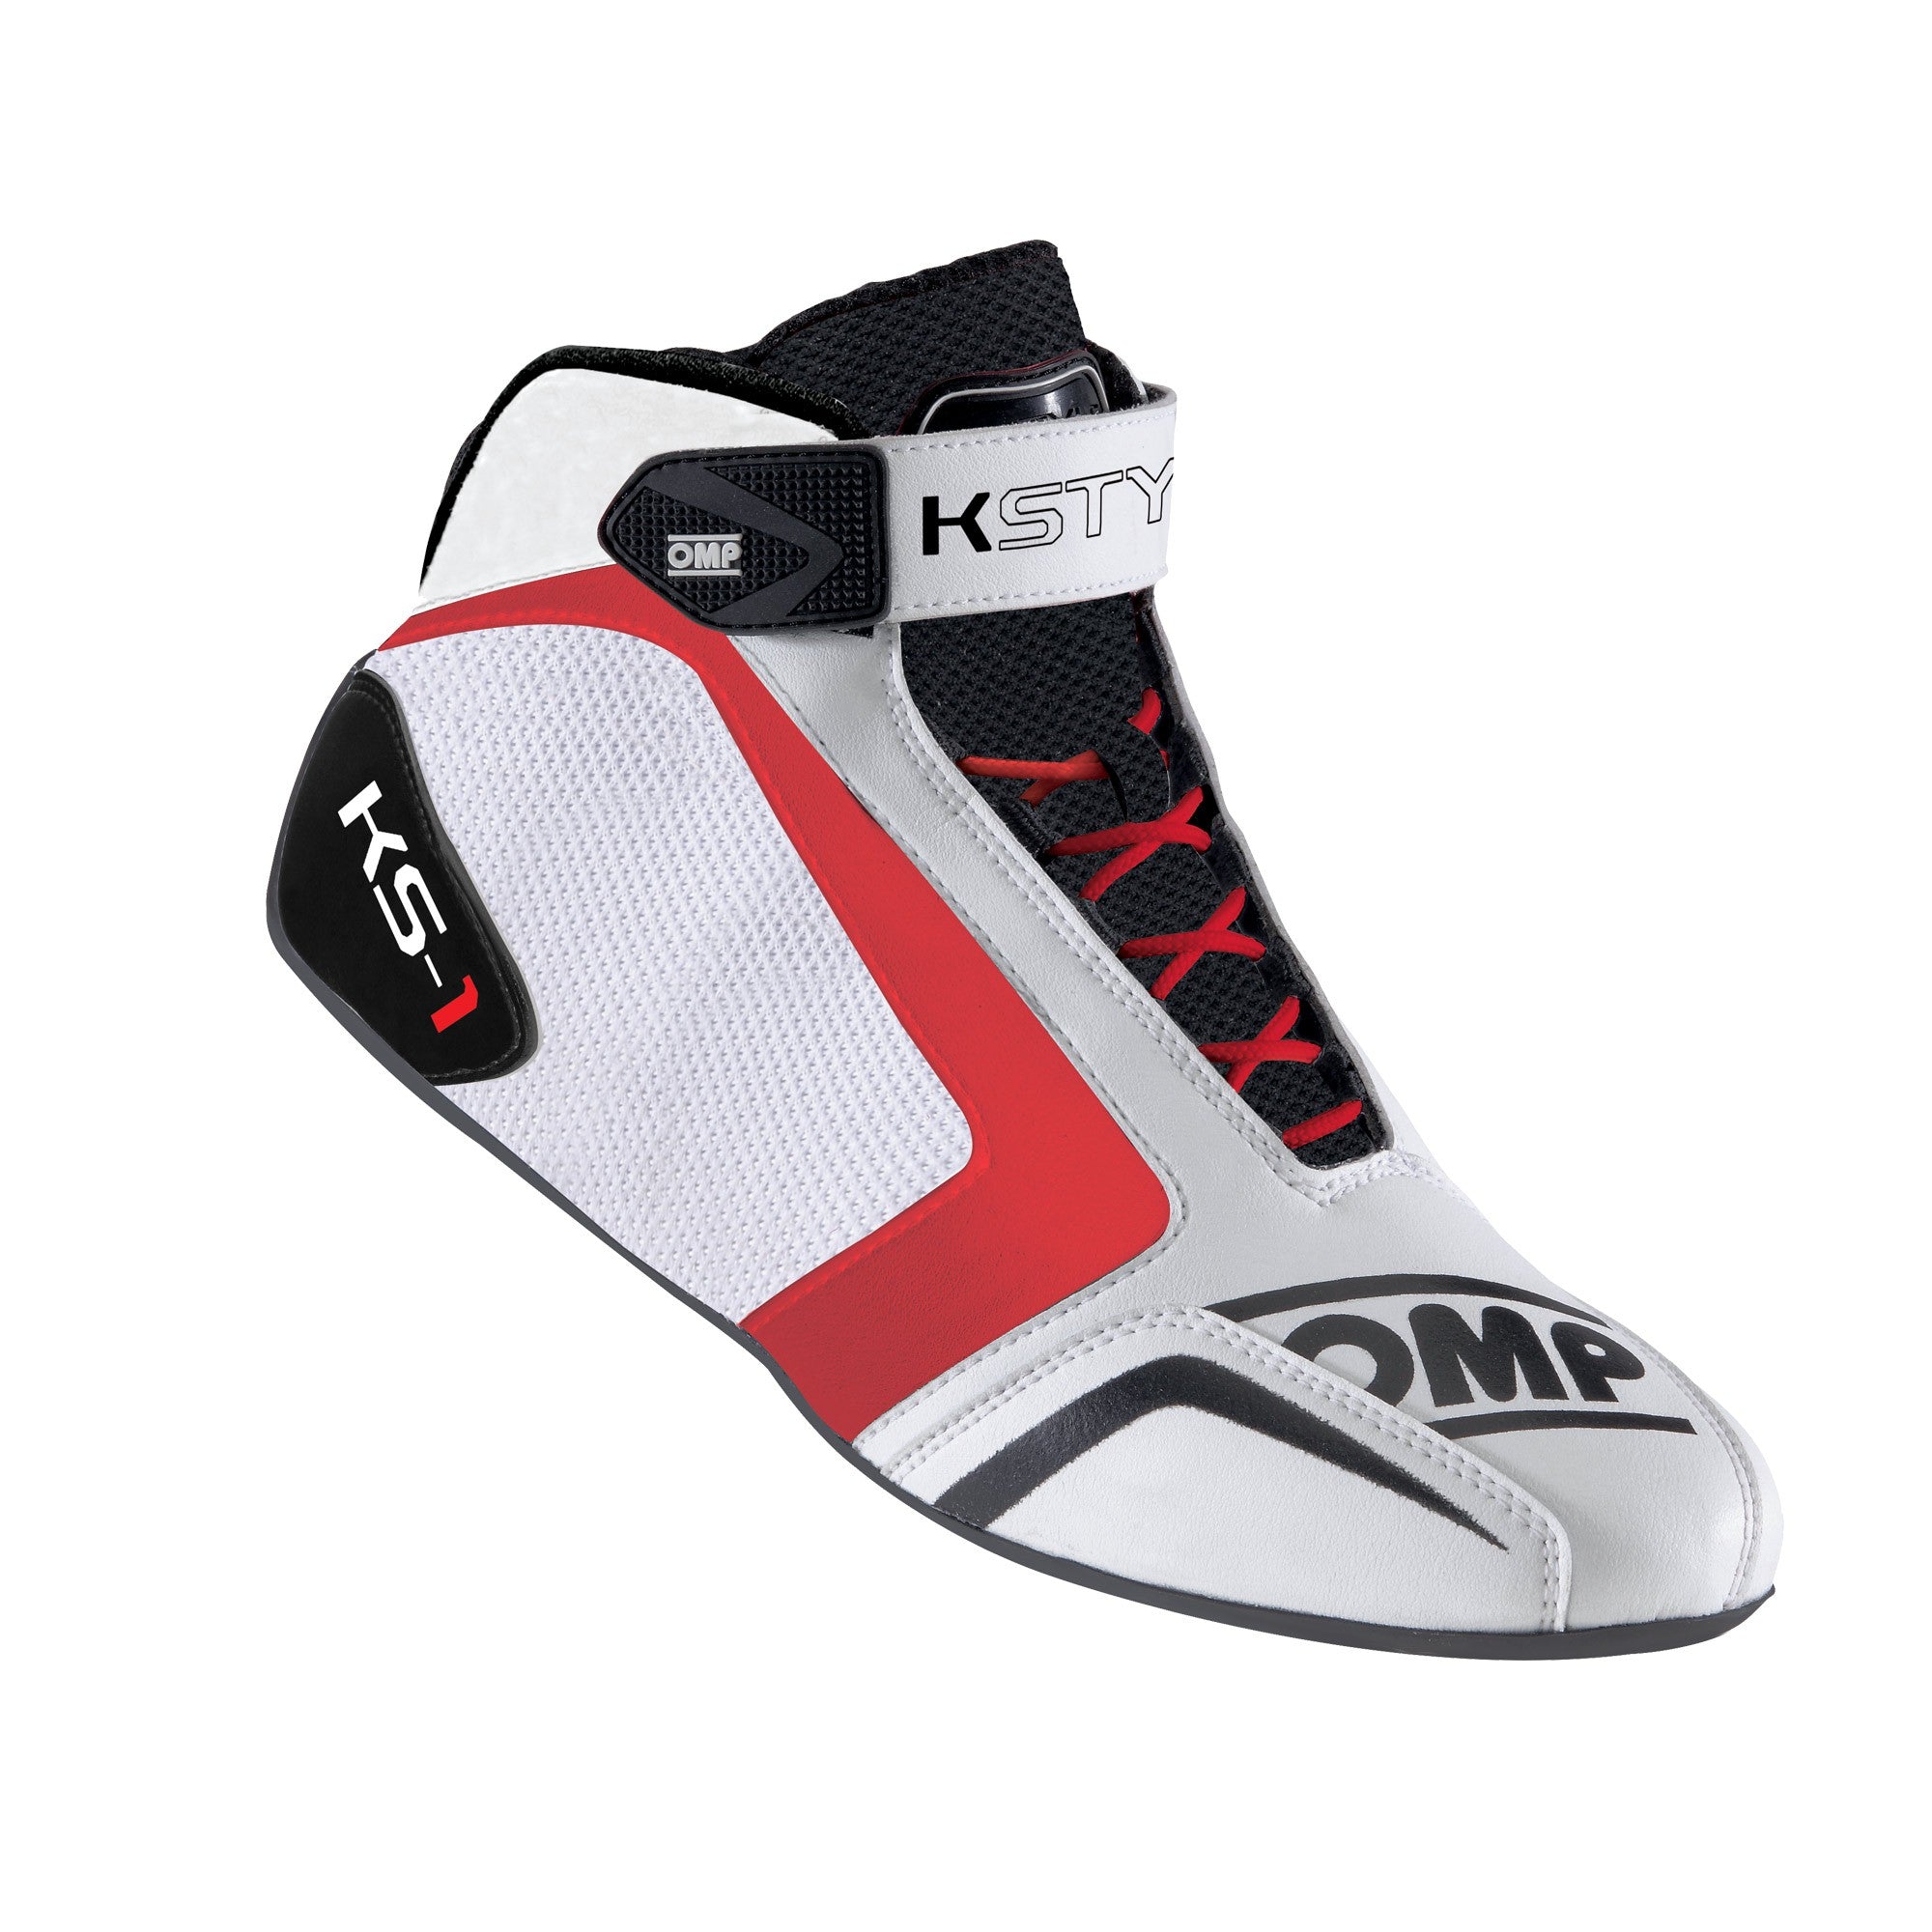 OMP KC0-0815-A01-120-43 (IC/81512043) Kart shoes KS-1, white/black/red, size 43 Photo-0 